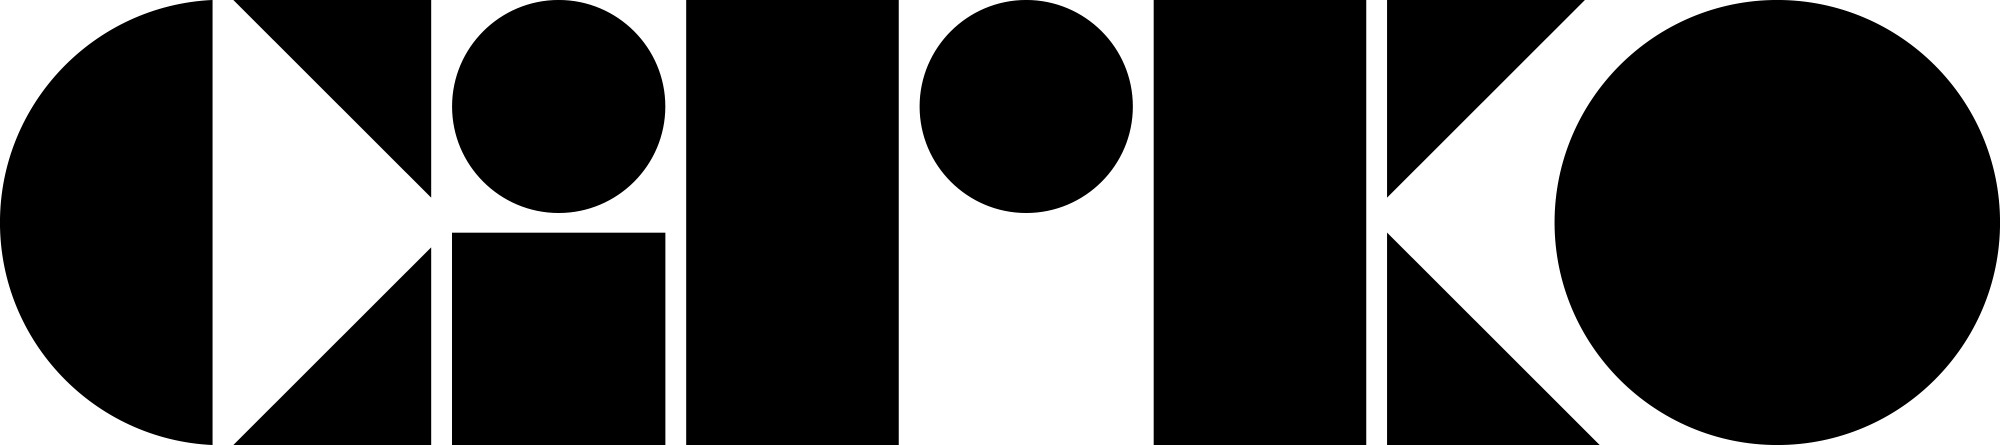 Cirko logo rgb musta 01